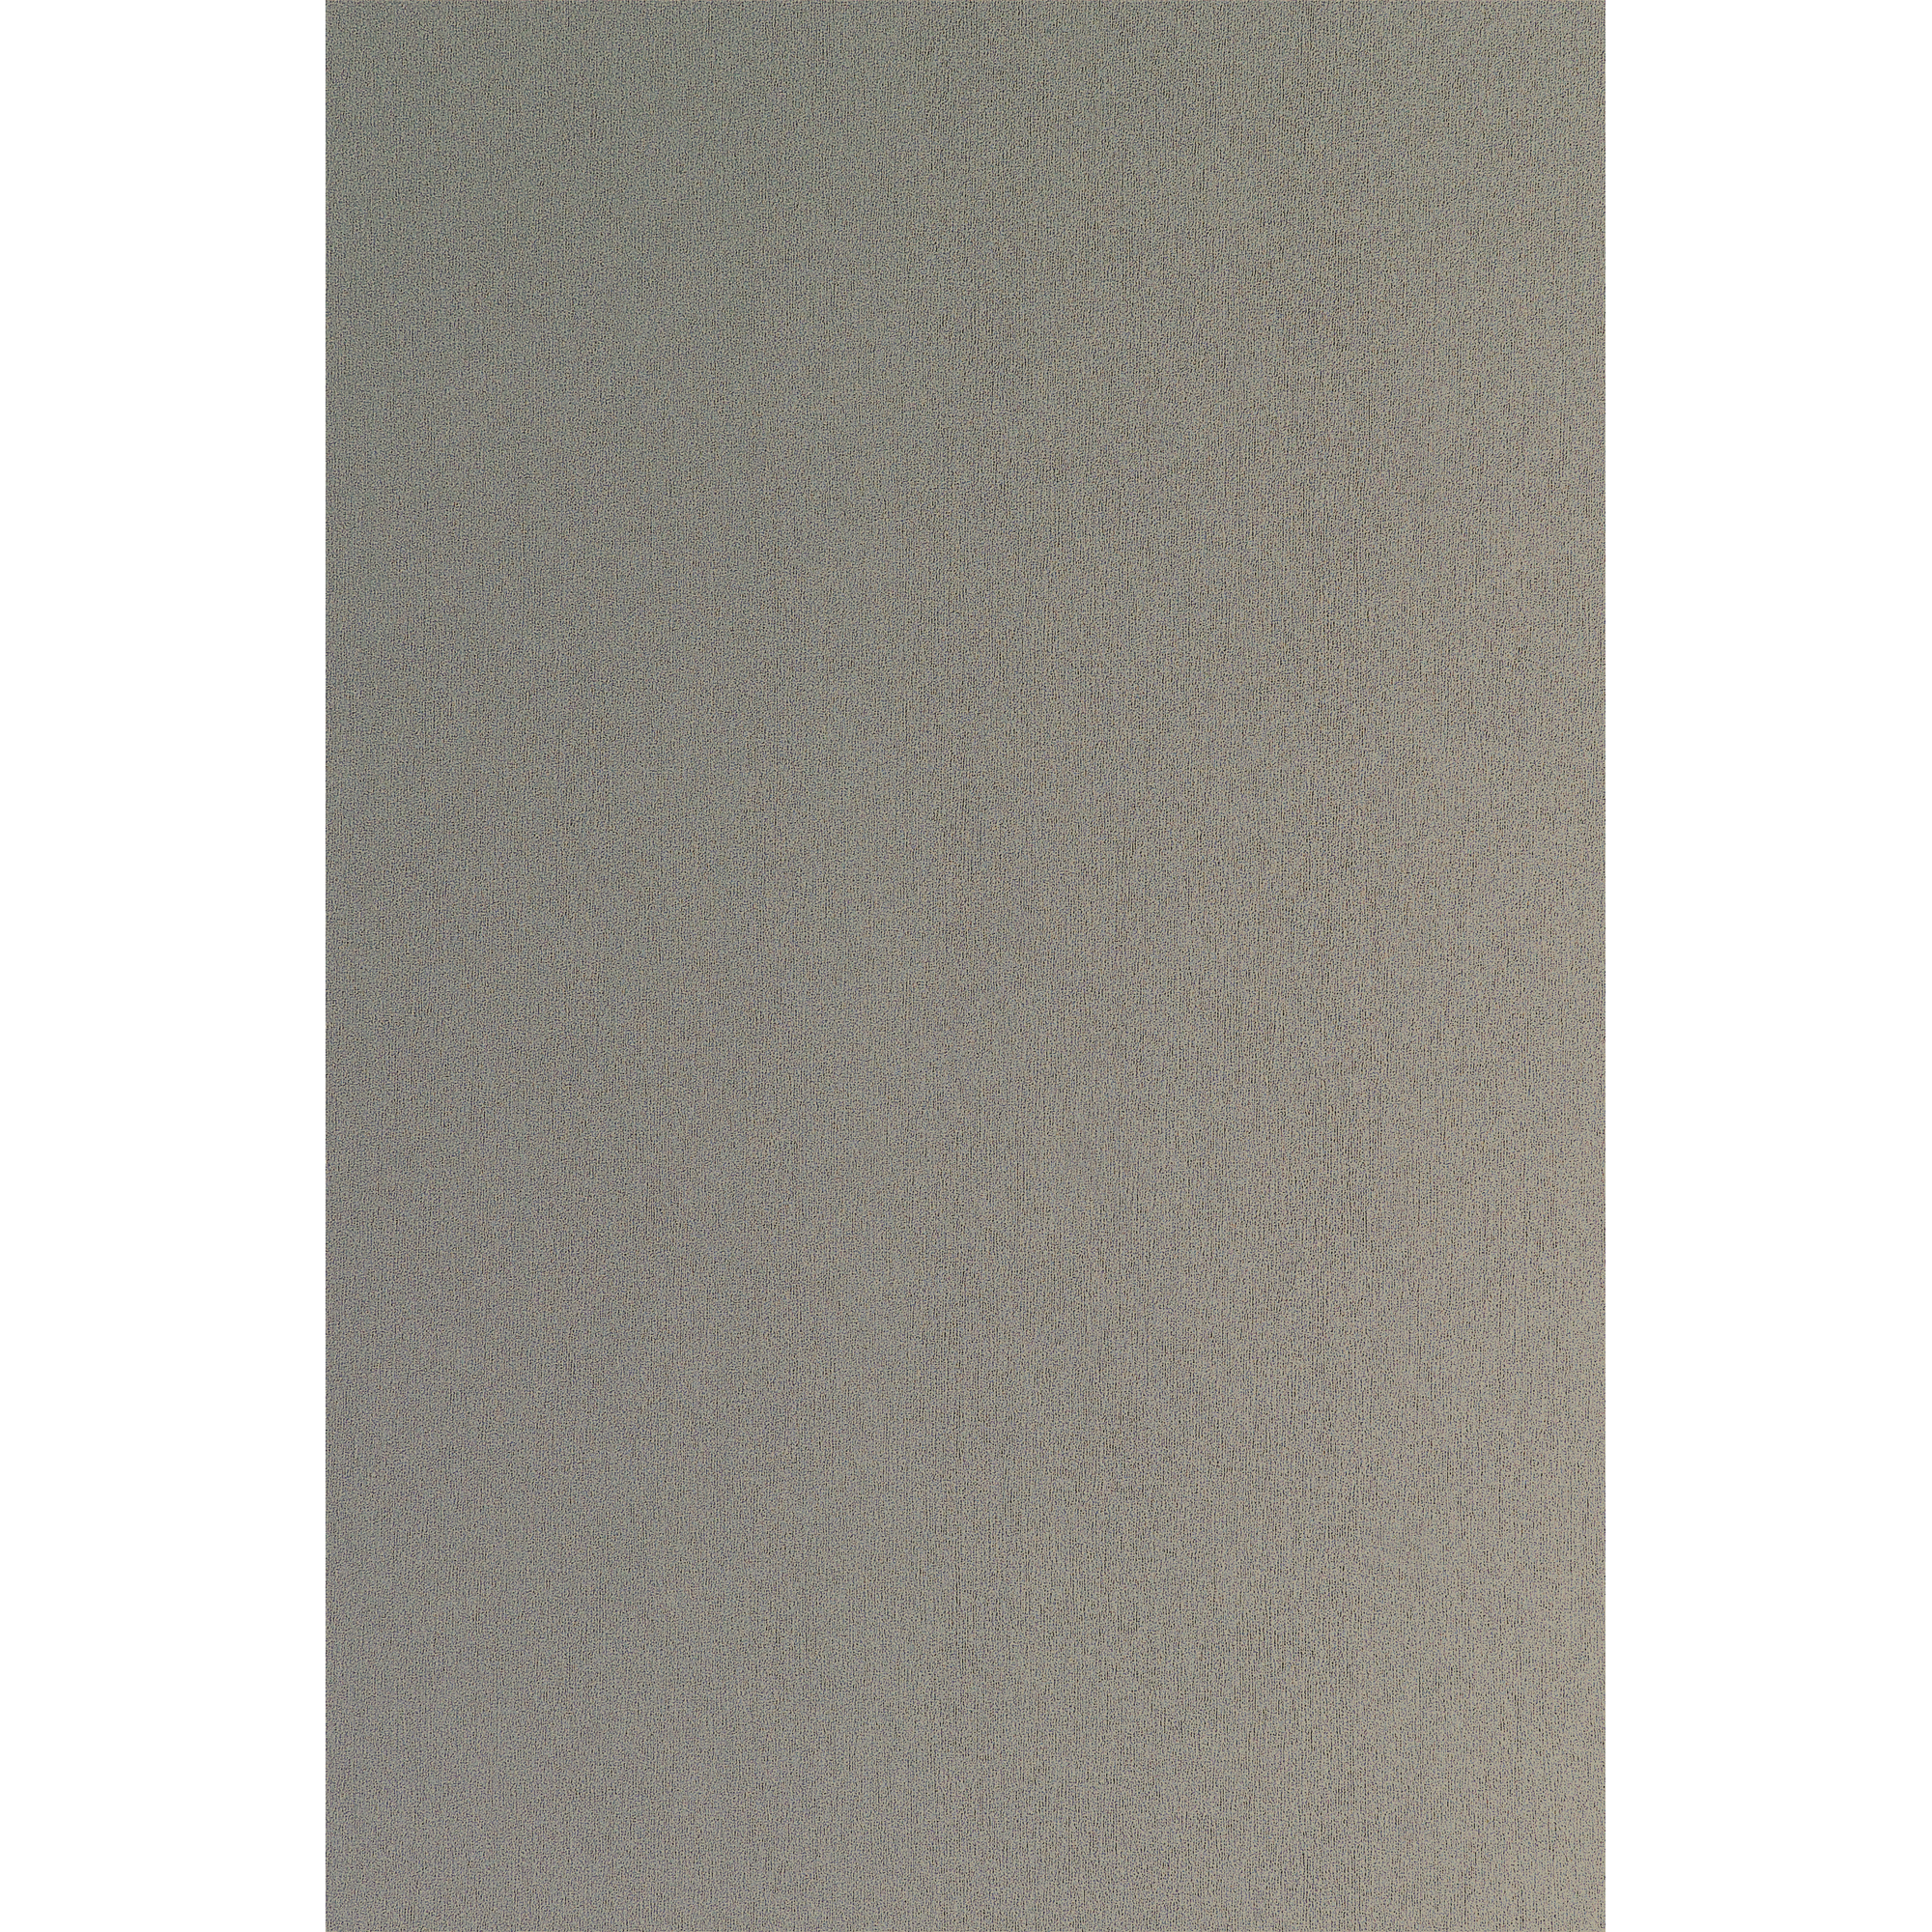 Arbeitsplatte 'Titan' grau 2750 x 600 x 38 mm + product picture